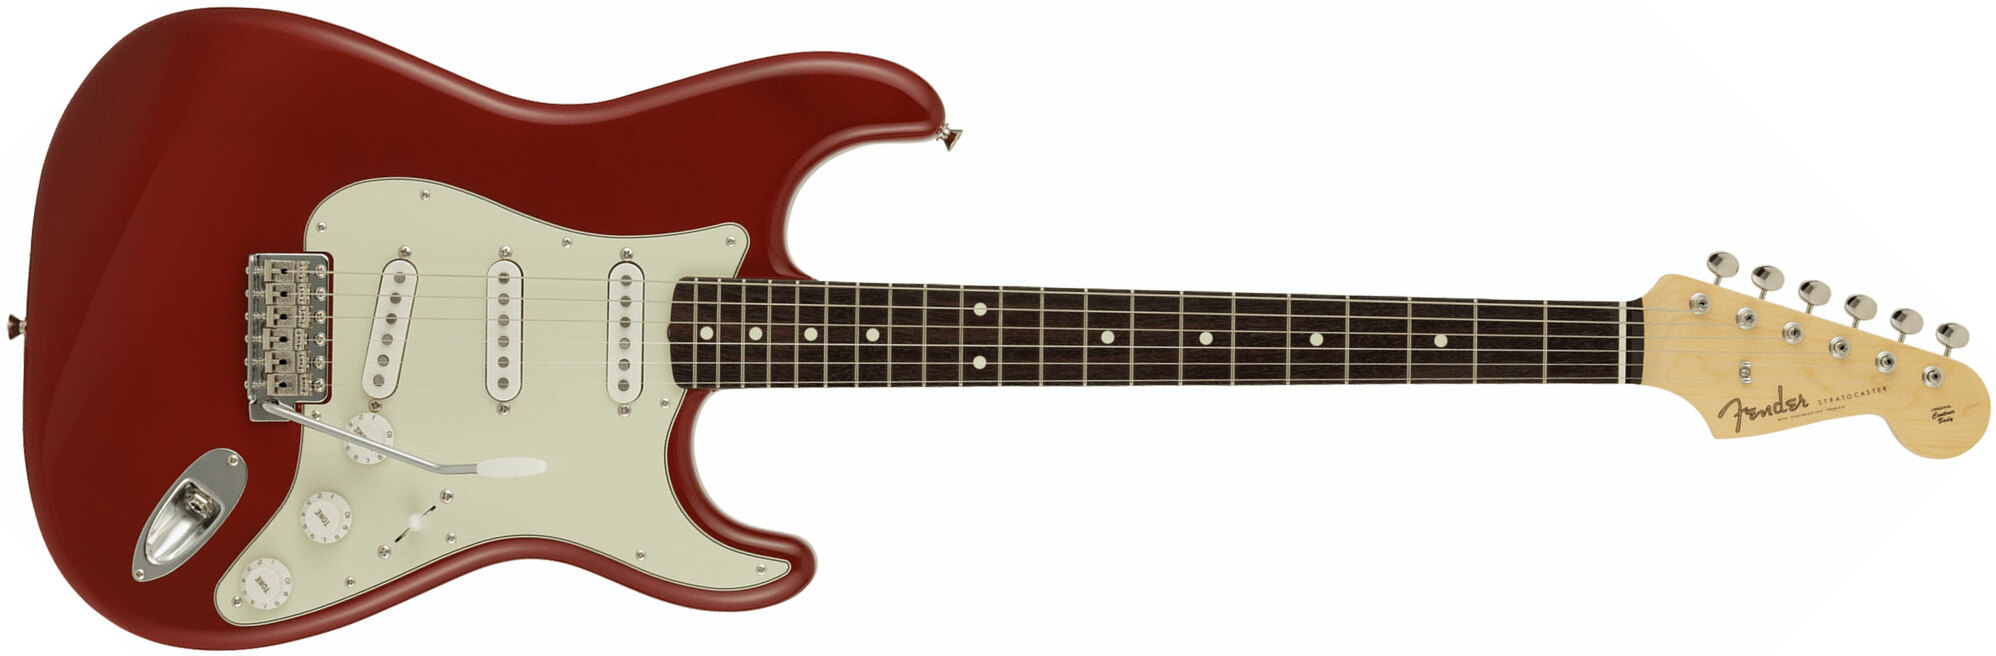 Fender Strat Traditional 60s Mij Jap 3s Trem Rw - Dakota Red Aged - Str shape electric guitar - Main picture